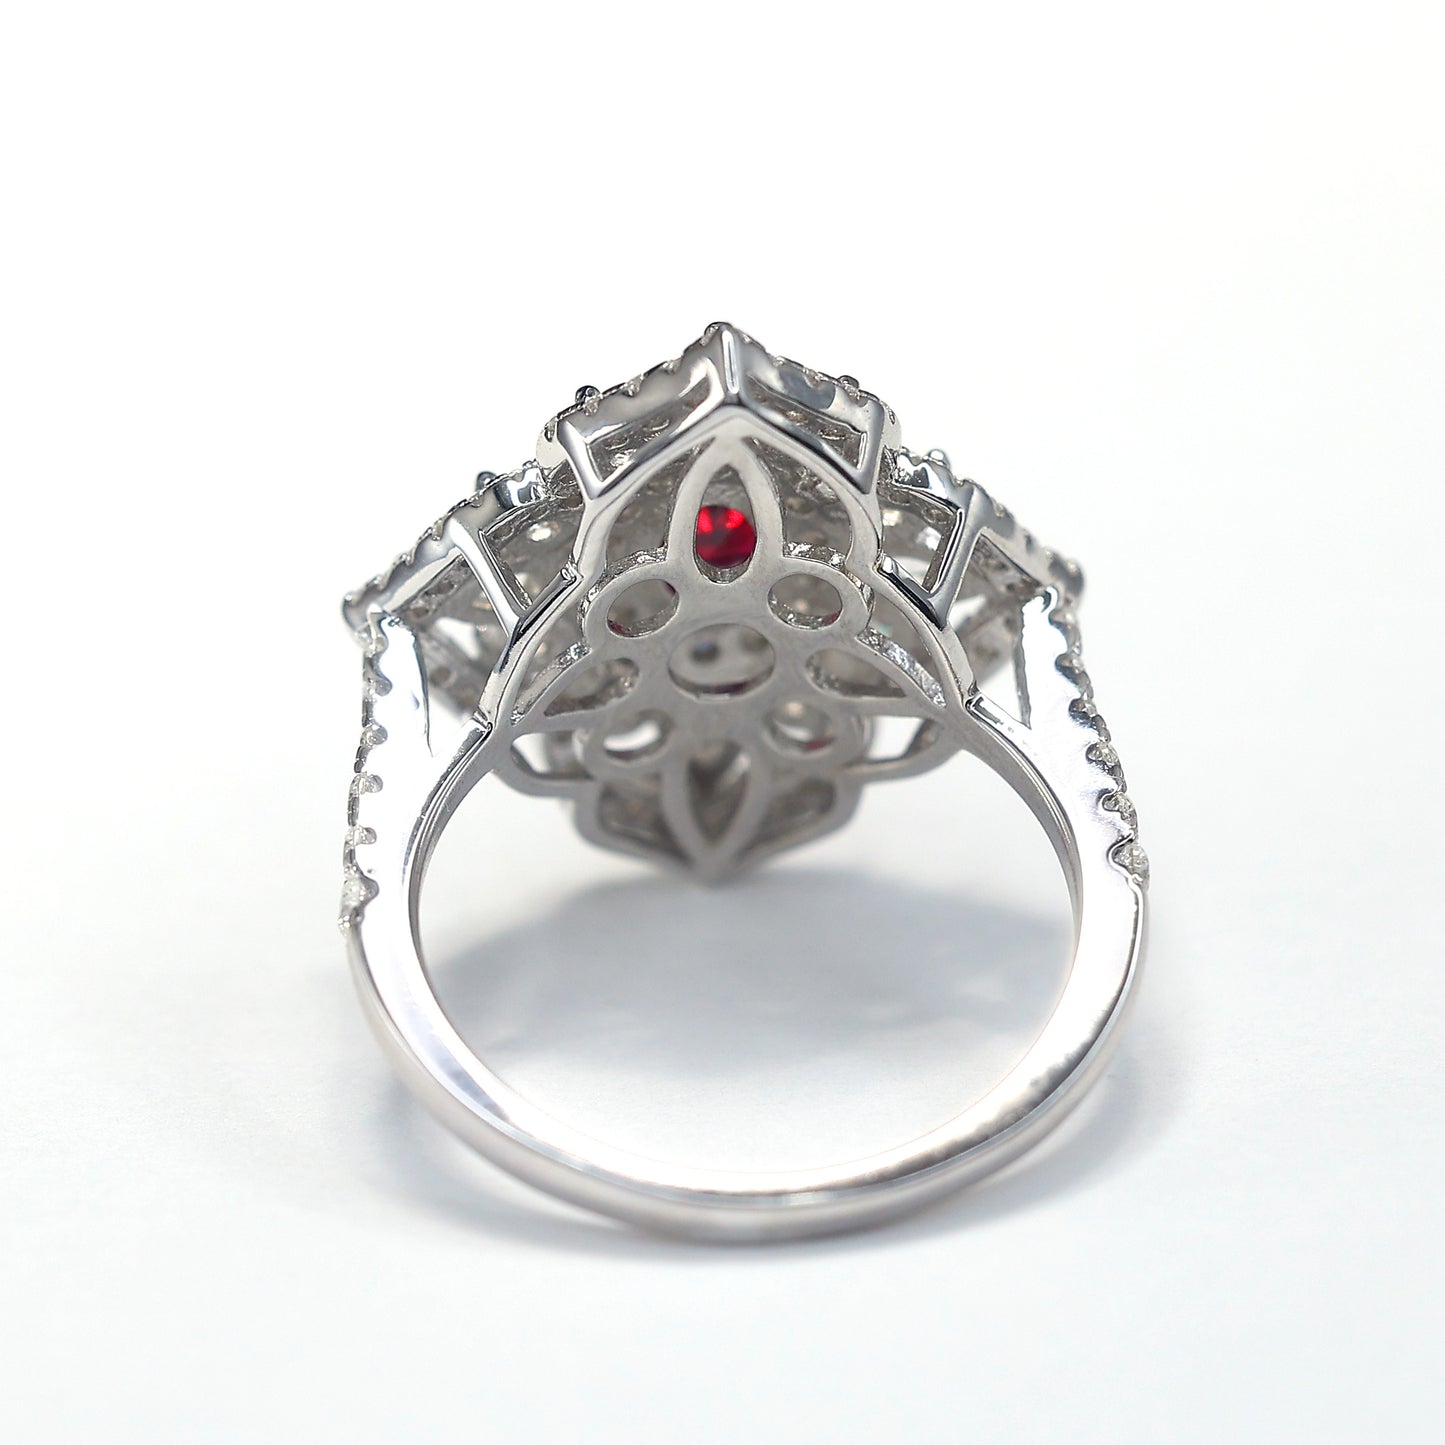 Rubinfarbener Ring mit Mikrofassung in Rubinfarbe, ausgefallener Ring mit vierblättrigem Kleeblatt, Sterlingsilber